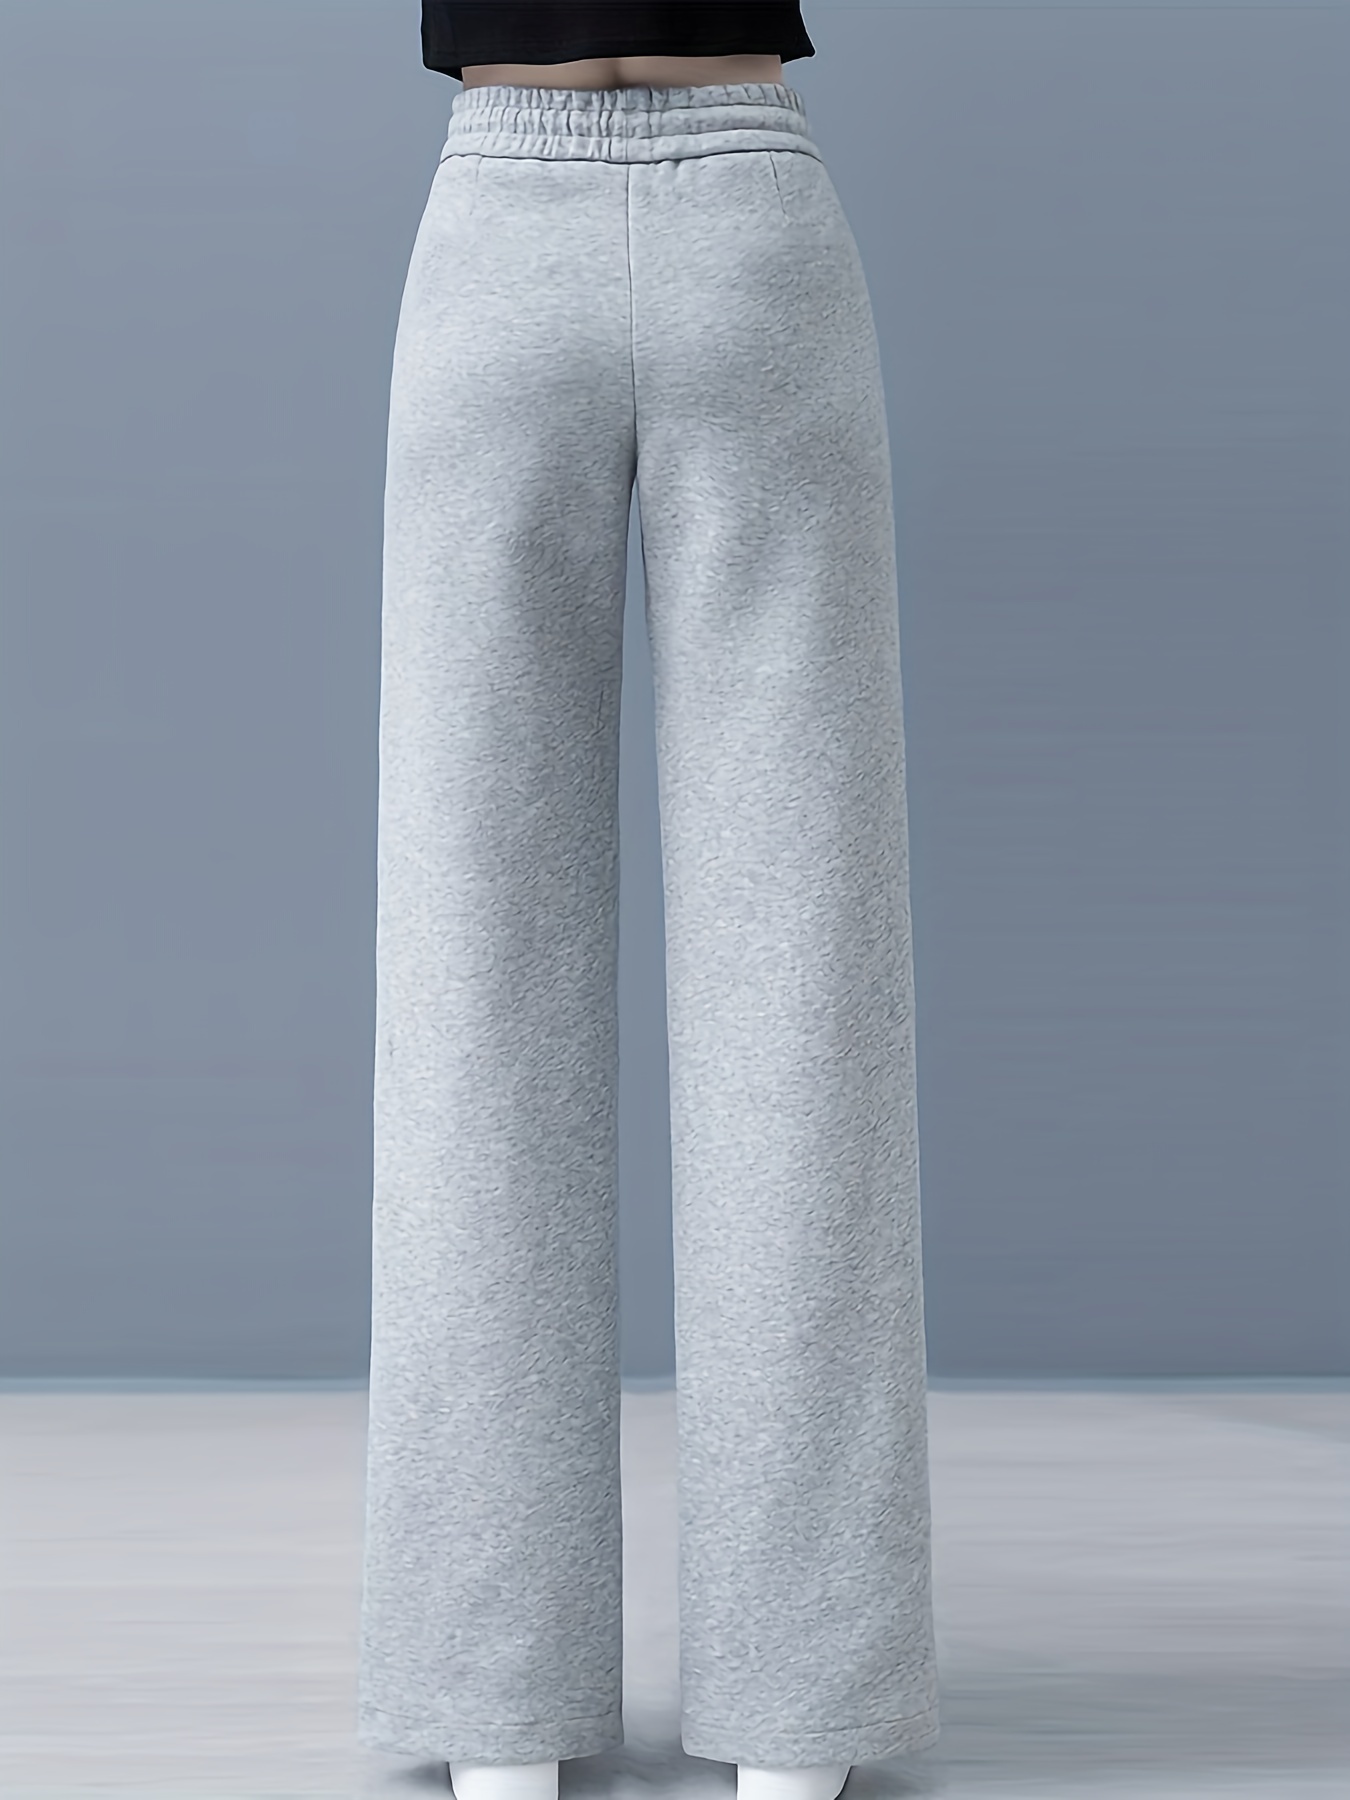 Floerns Women's Solid Drawstring Sweatpant Joggers Straight Leg Pants Grey  XS : : Fashion